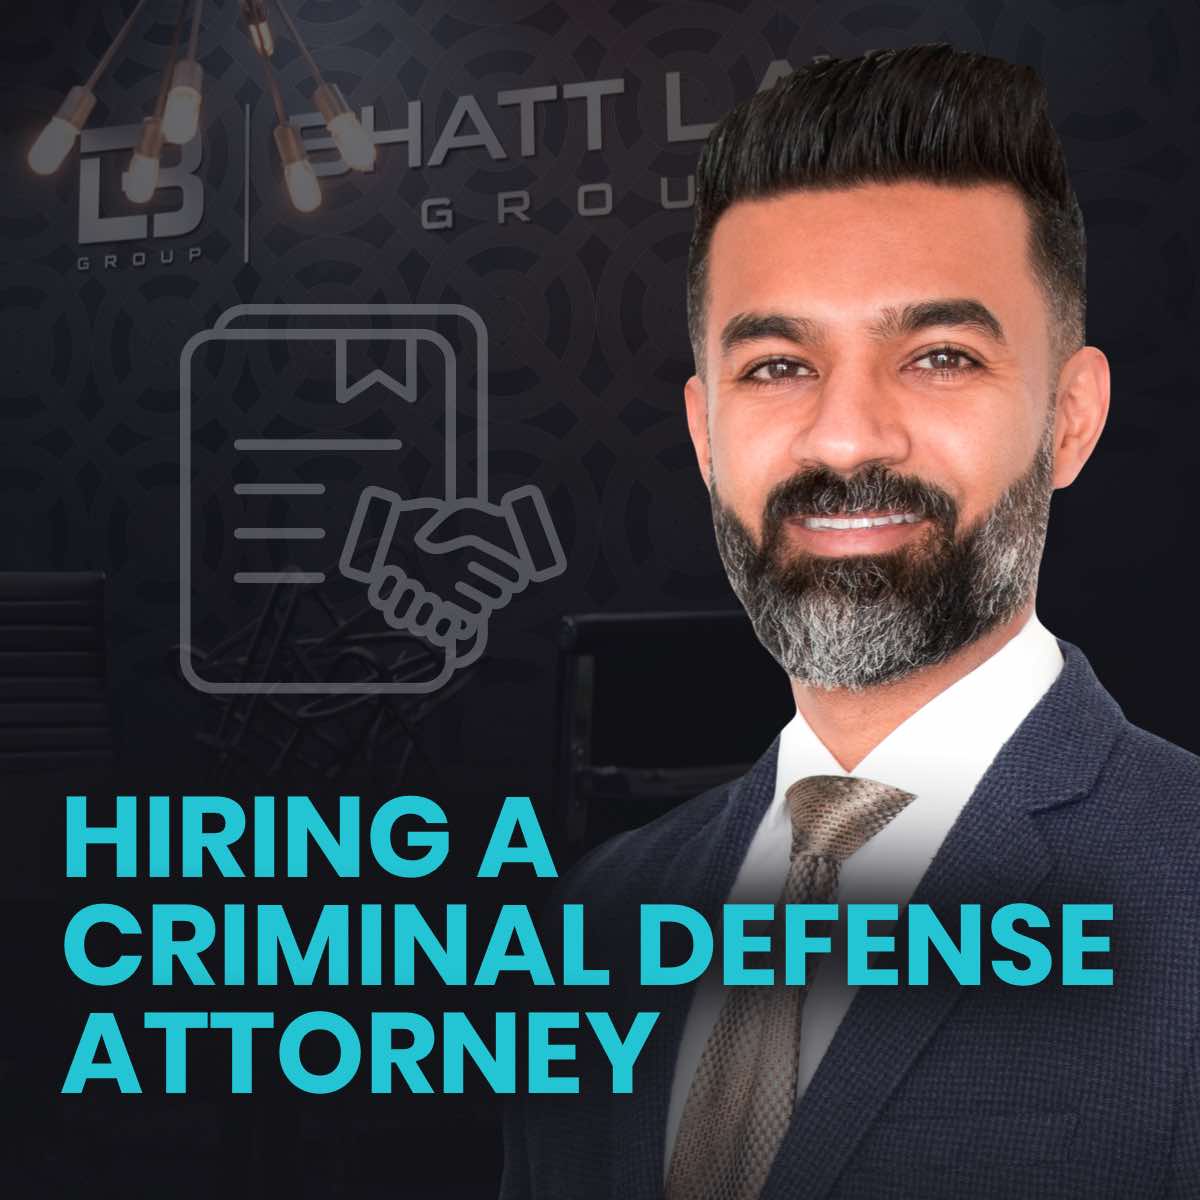 Hiring a Criminal Defense Attorney Bhatt Law Group